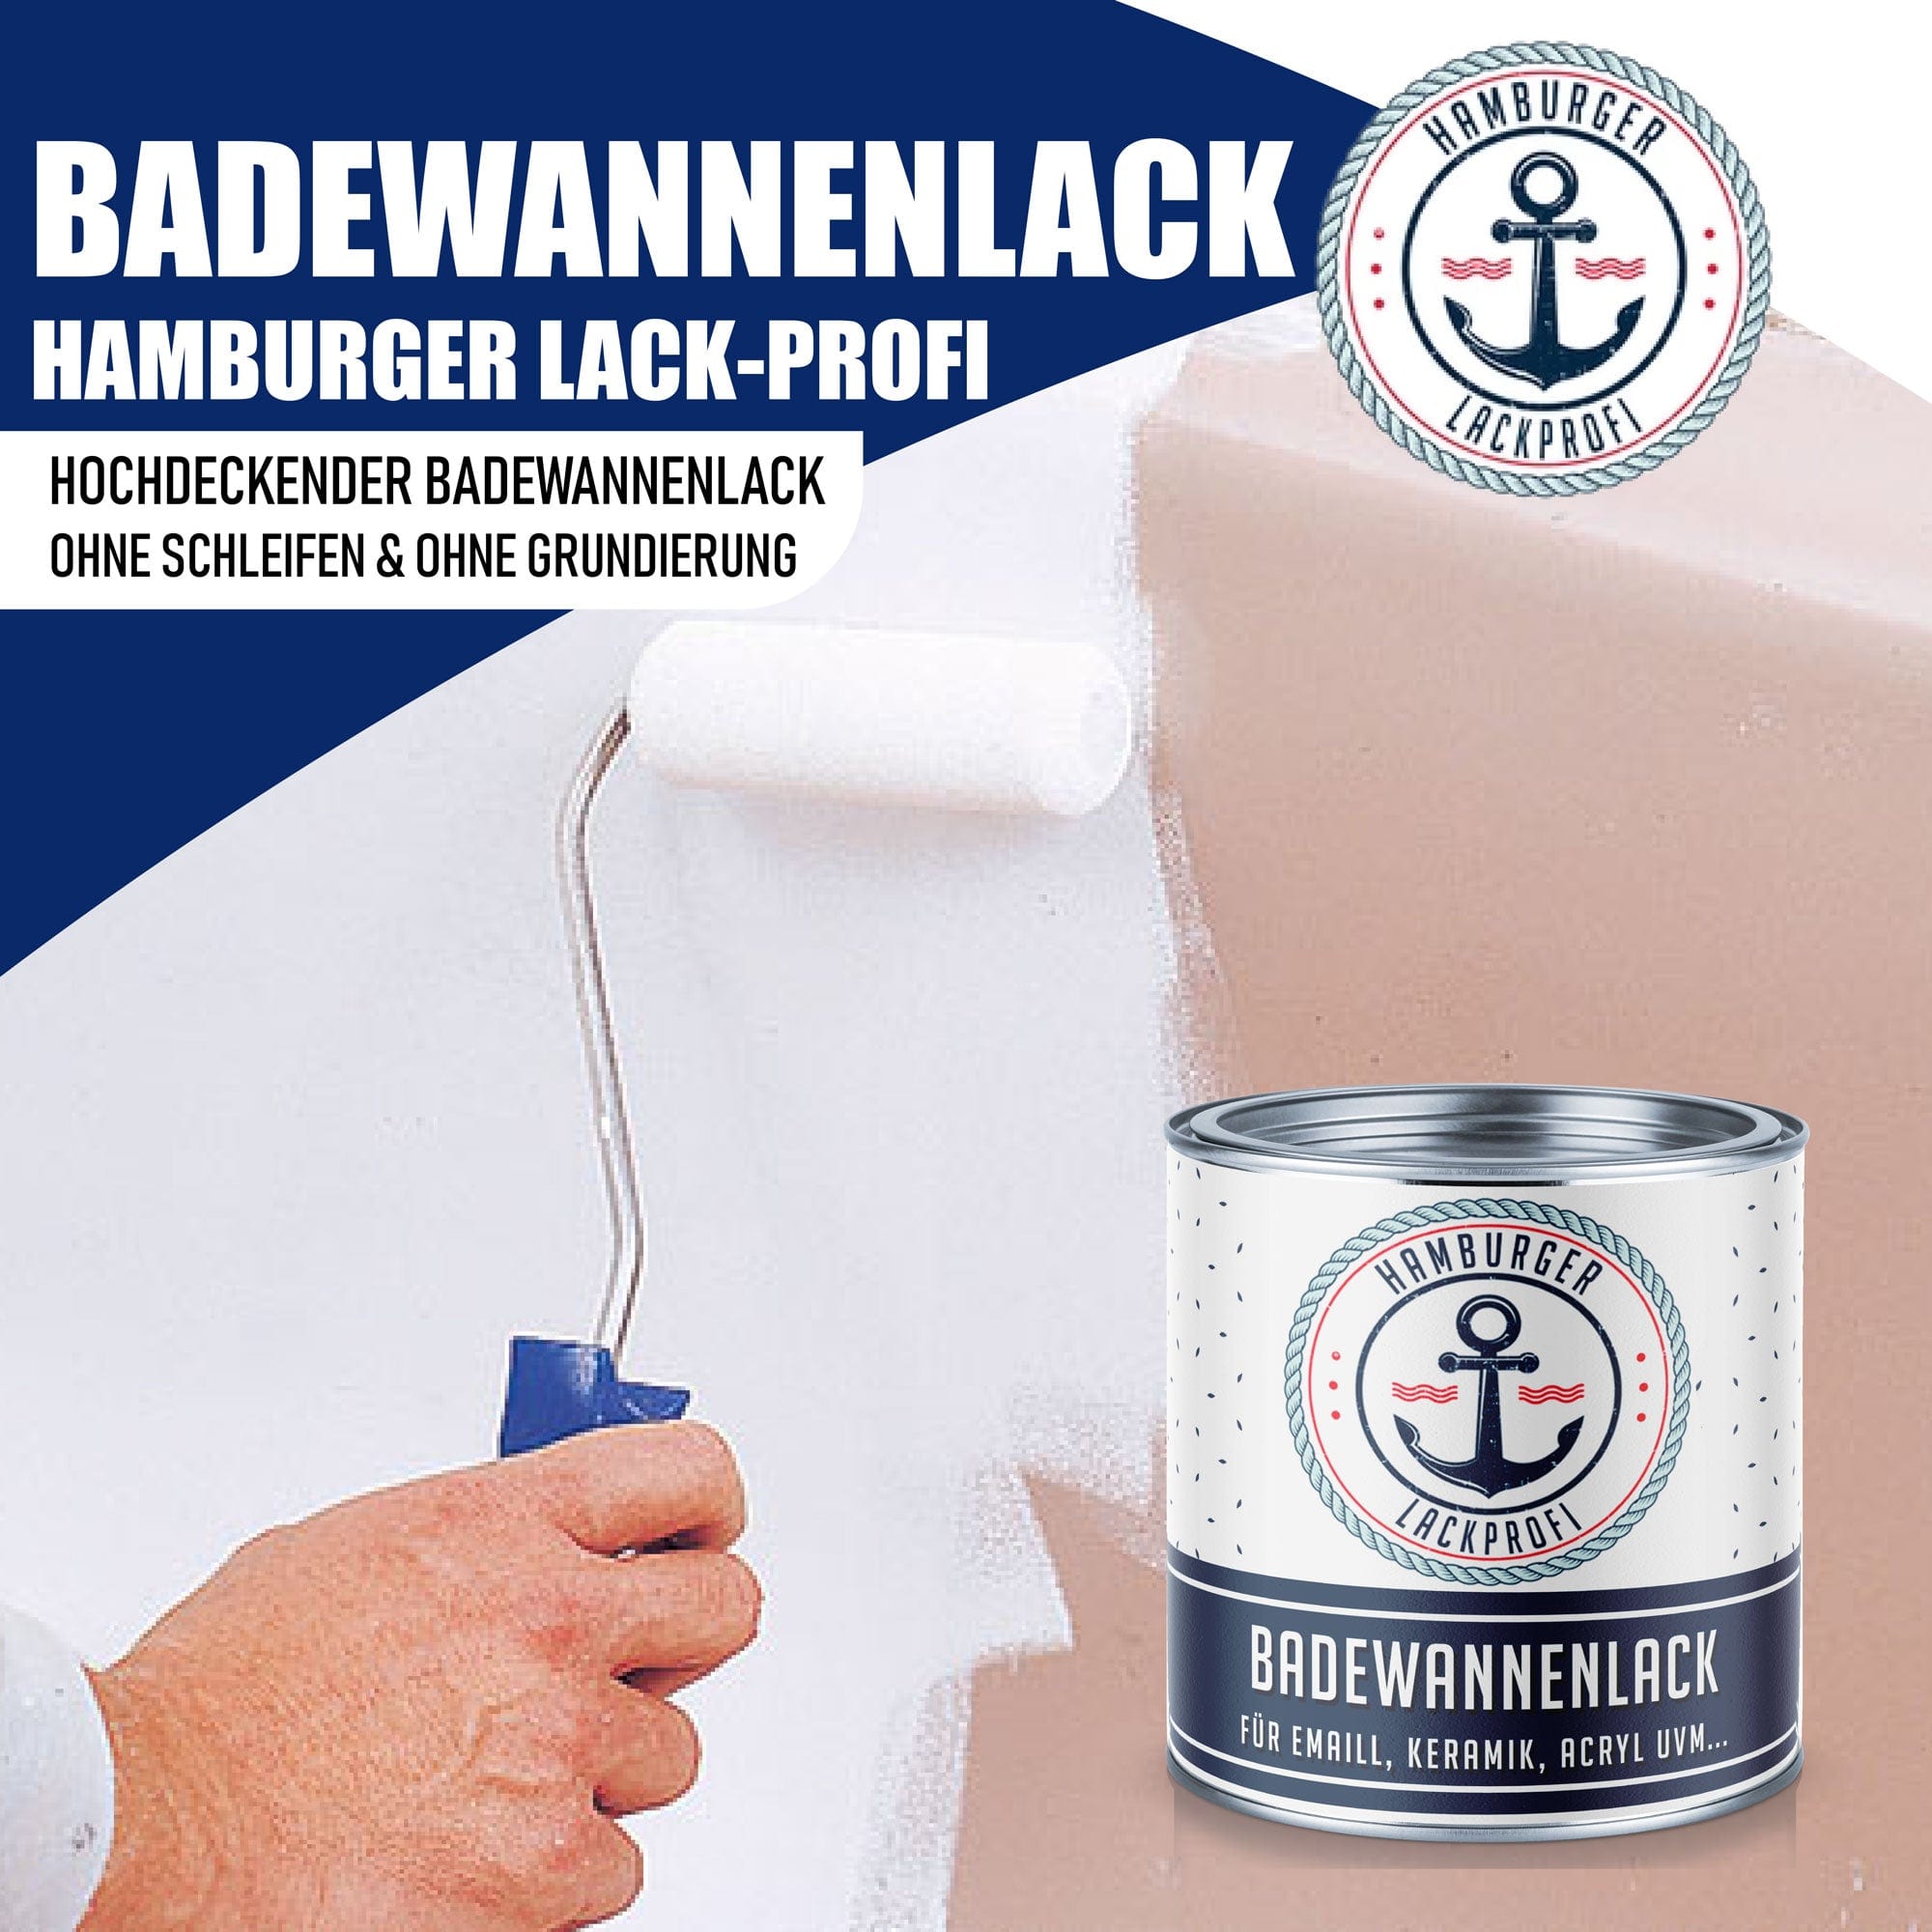 Hamburger Lack-Profi Badewannenlack Hamburger Lack-Profi 2K Badewannenlack Olivgrau RAL 7002 - Glänzend / Seidenmatt / Matt